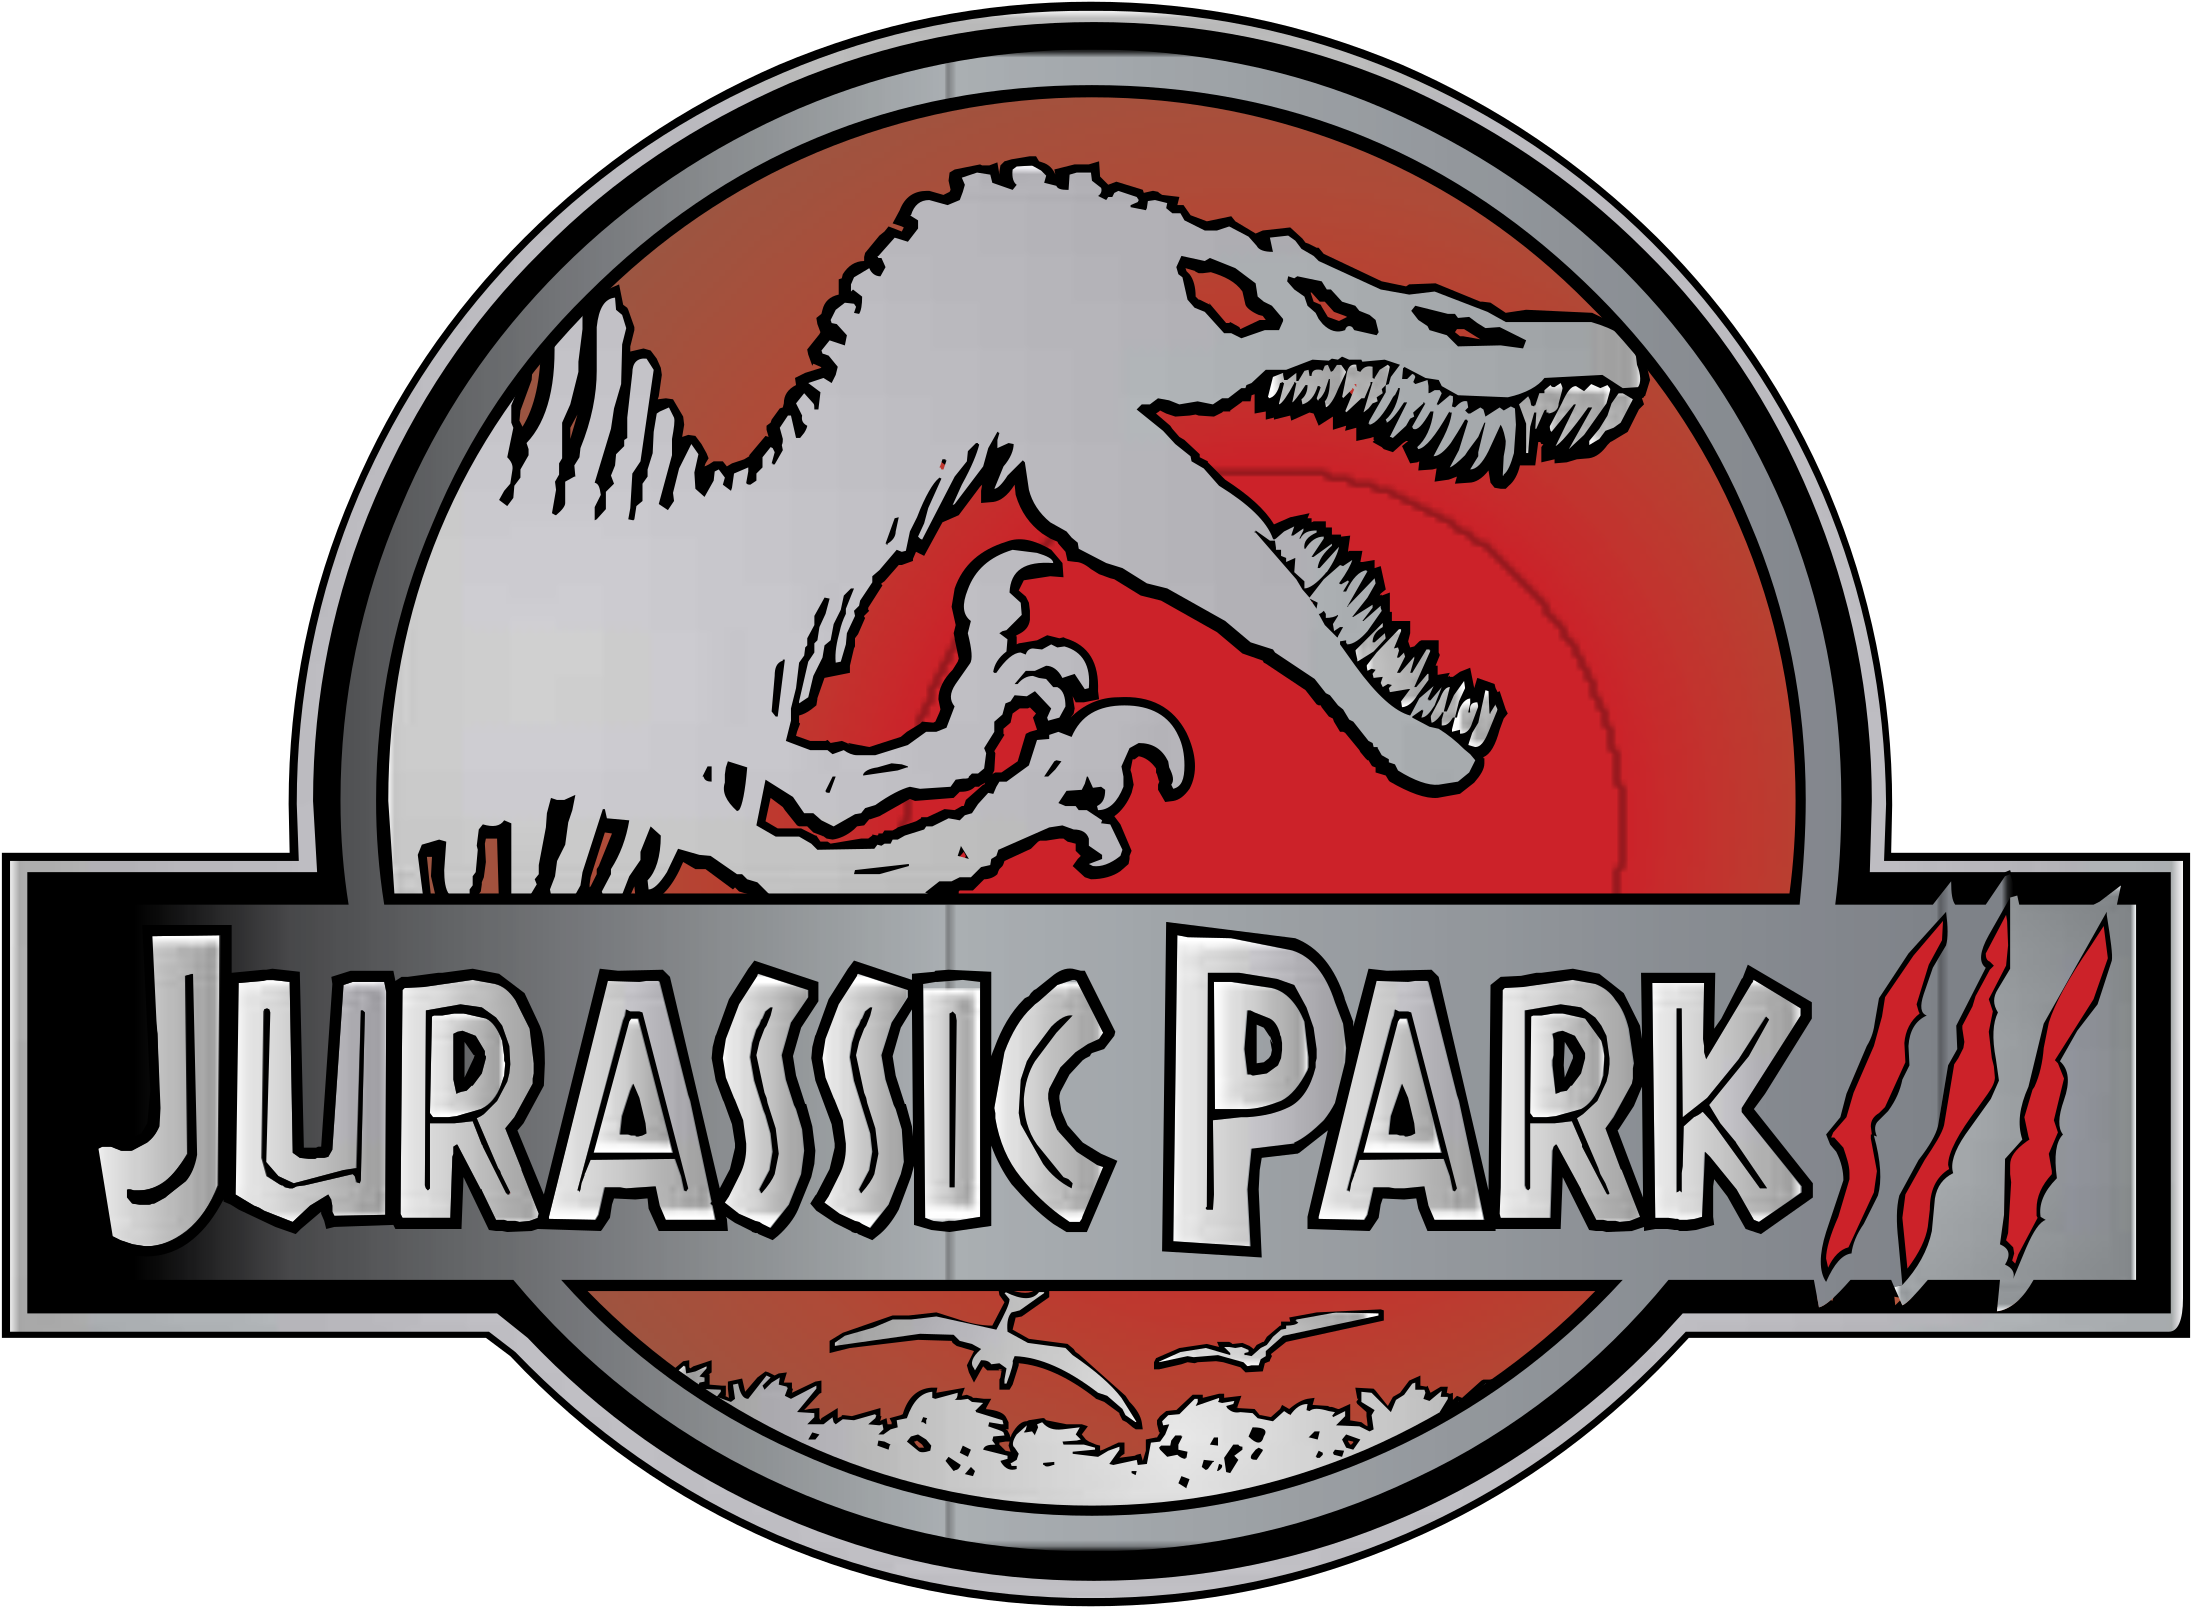 2400 X 2400 9 - Jurassic Park 3 Logo (2400x2400)